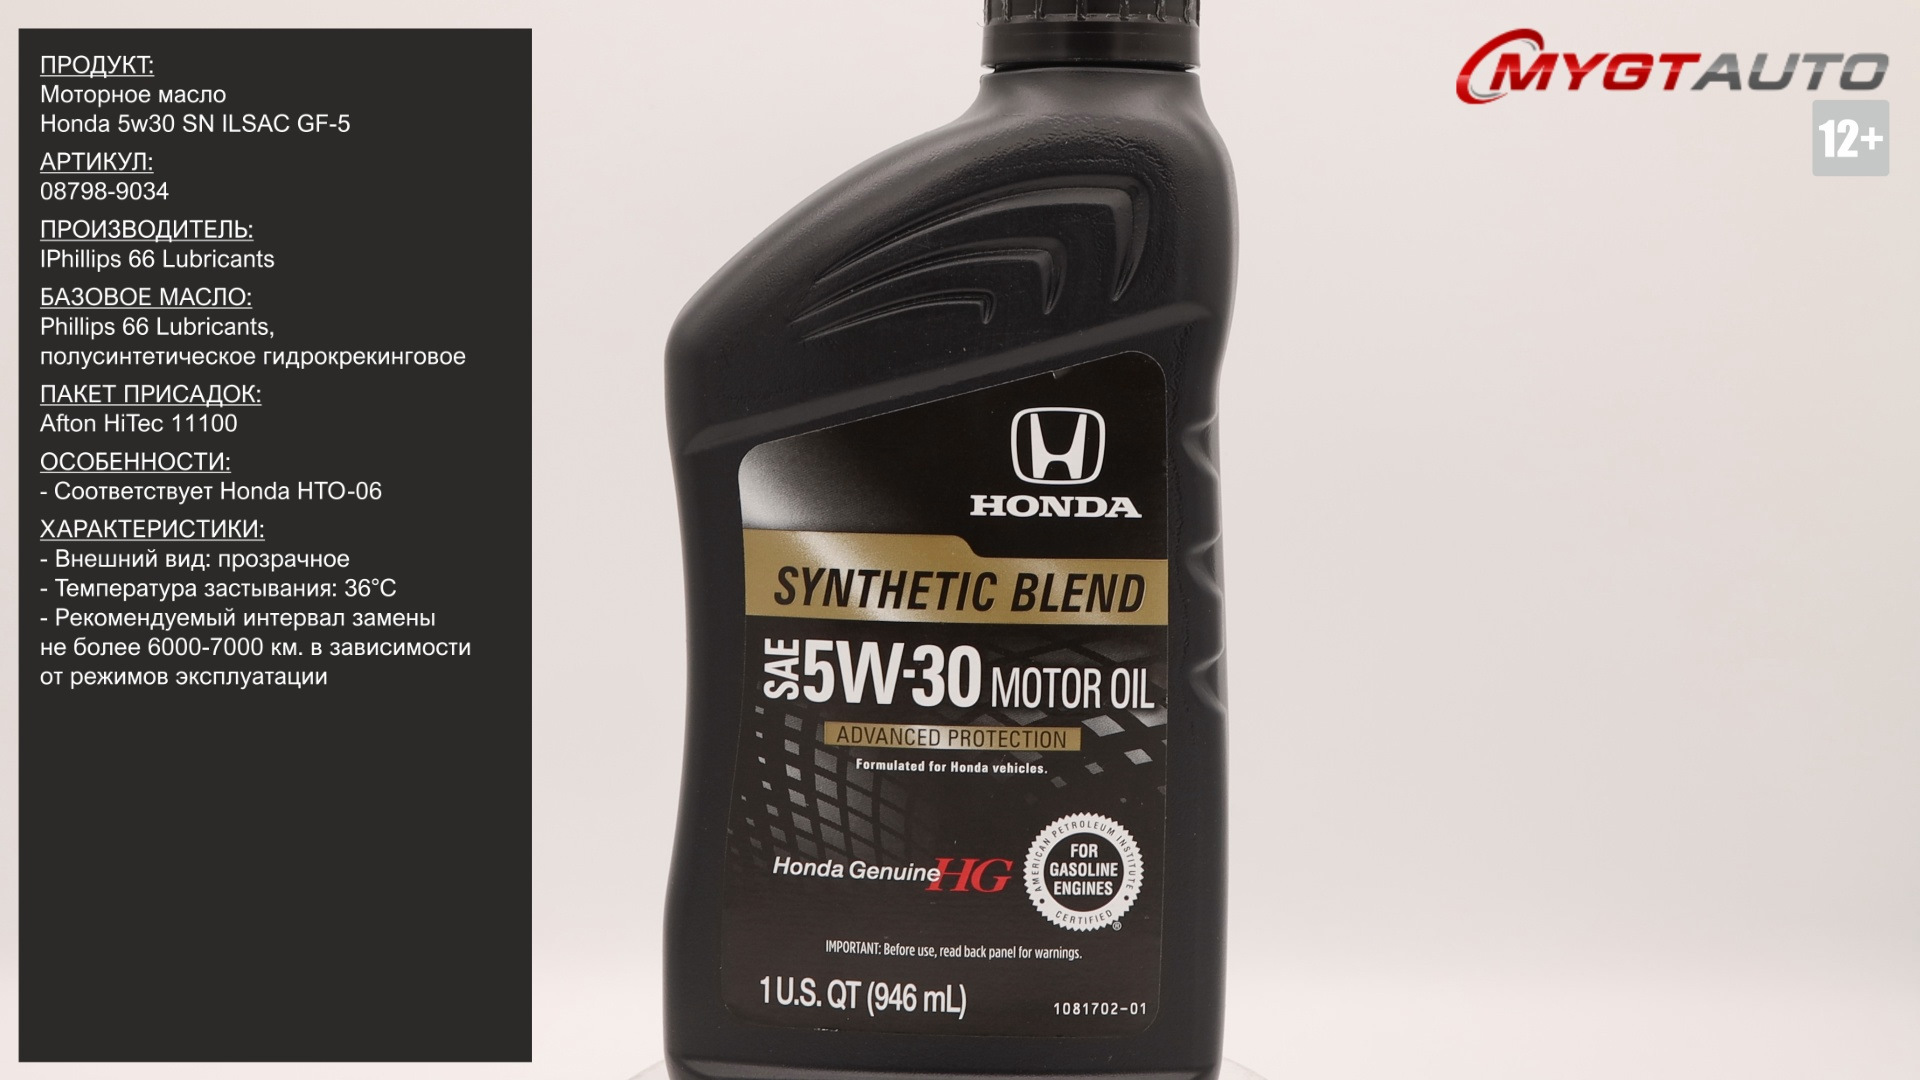 Артикулы масла хонда. Зонда масло оригинал 5w20. Honda Synthetic Blend 5w30. Моторное масло Honda 5w30 Synthetic Blend. Масло Хонда оригинал синтетик 5w30.